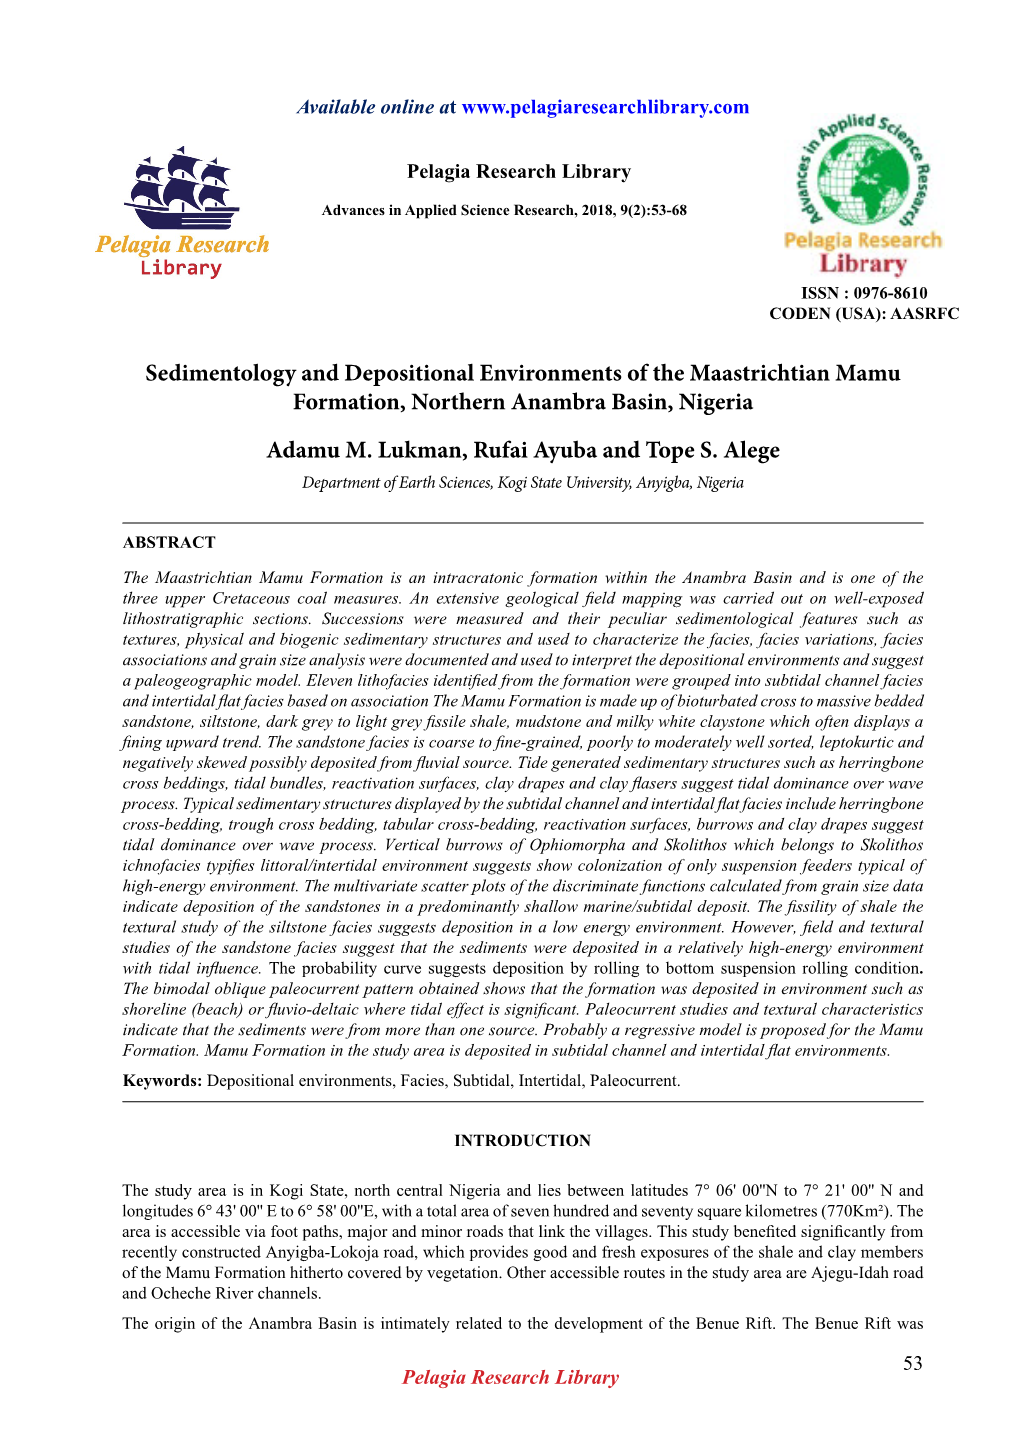 Sedimentology and Depositional Environments of the Maastrichtian Mamu Formation, Northern Anambra Basin, Nigeria